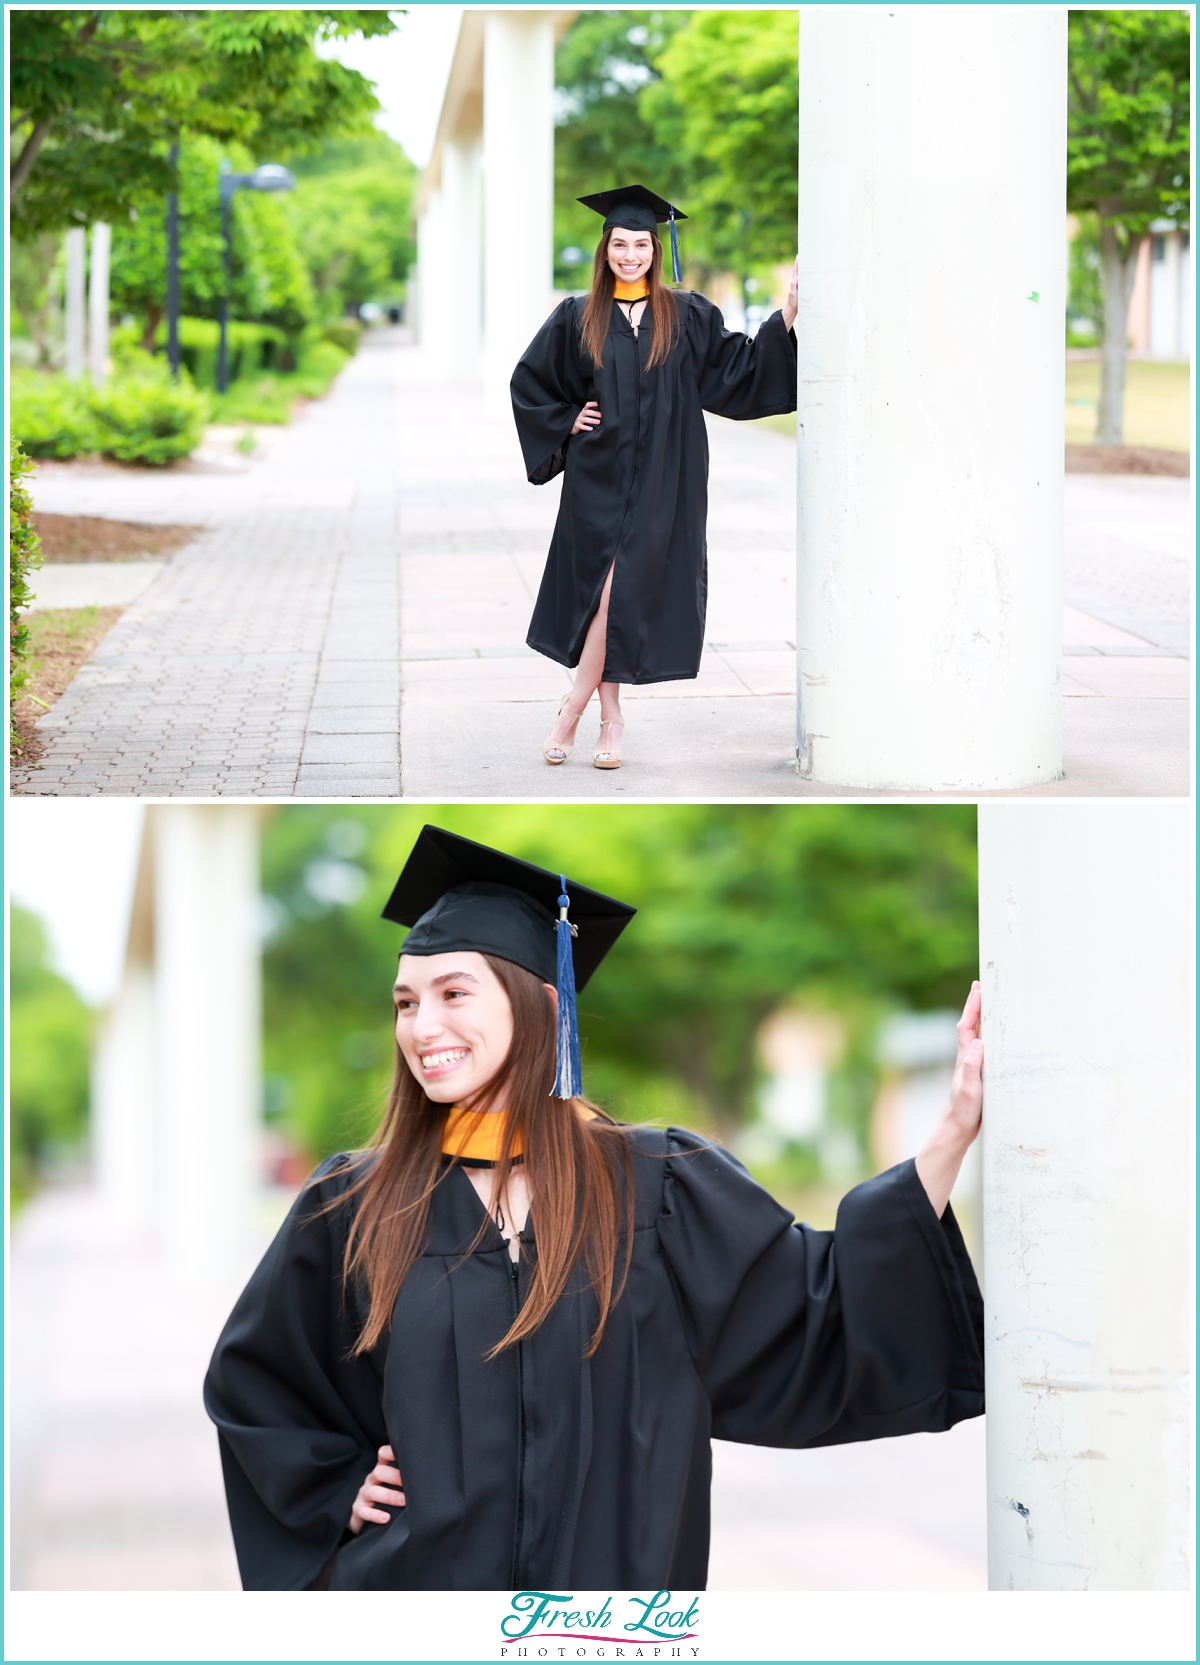 ODU Graduation Photoshoot